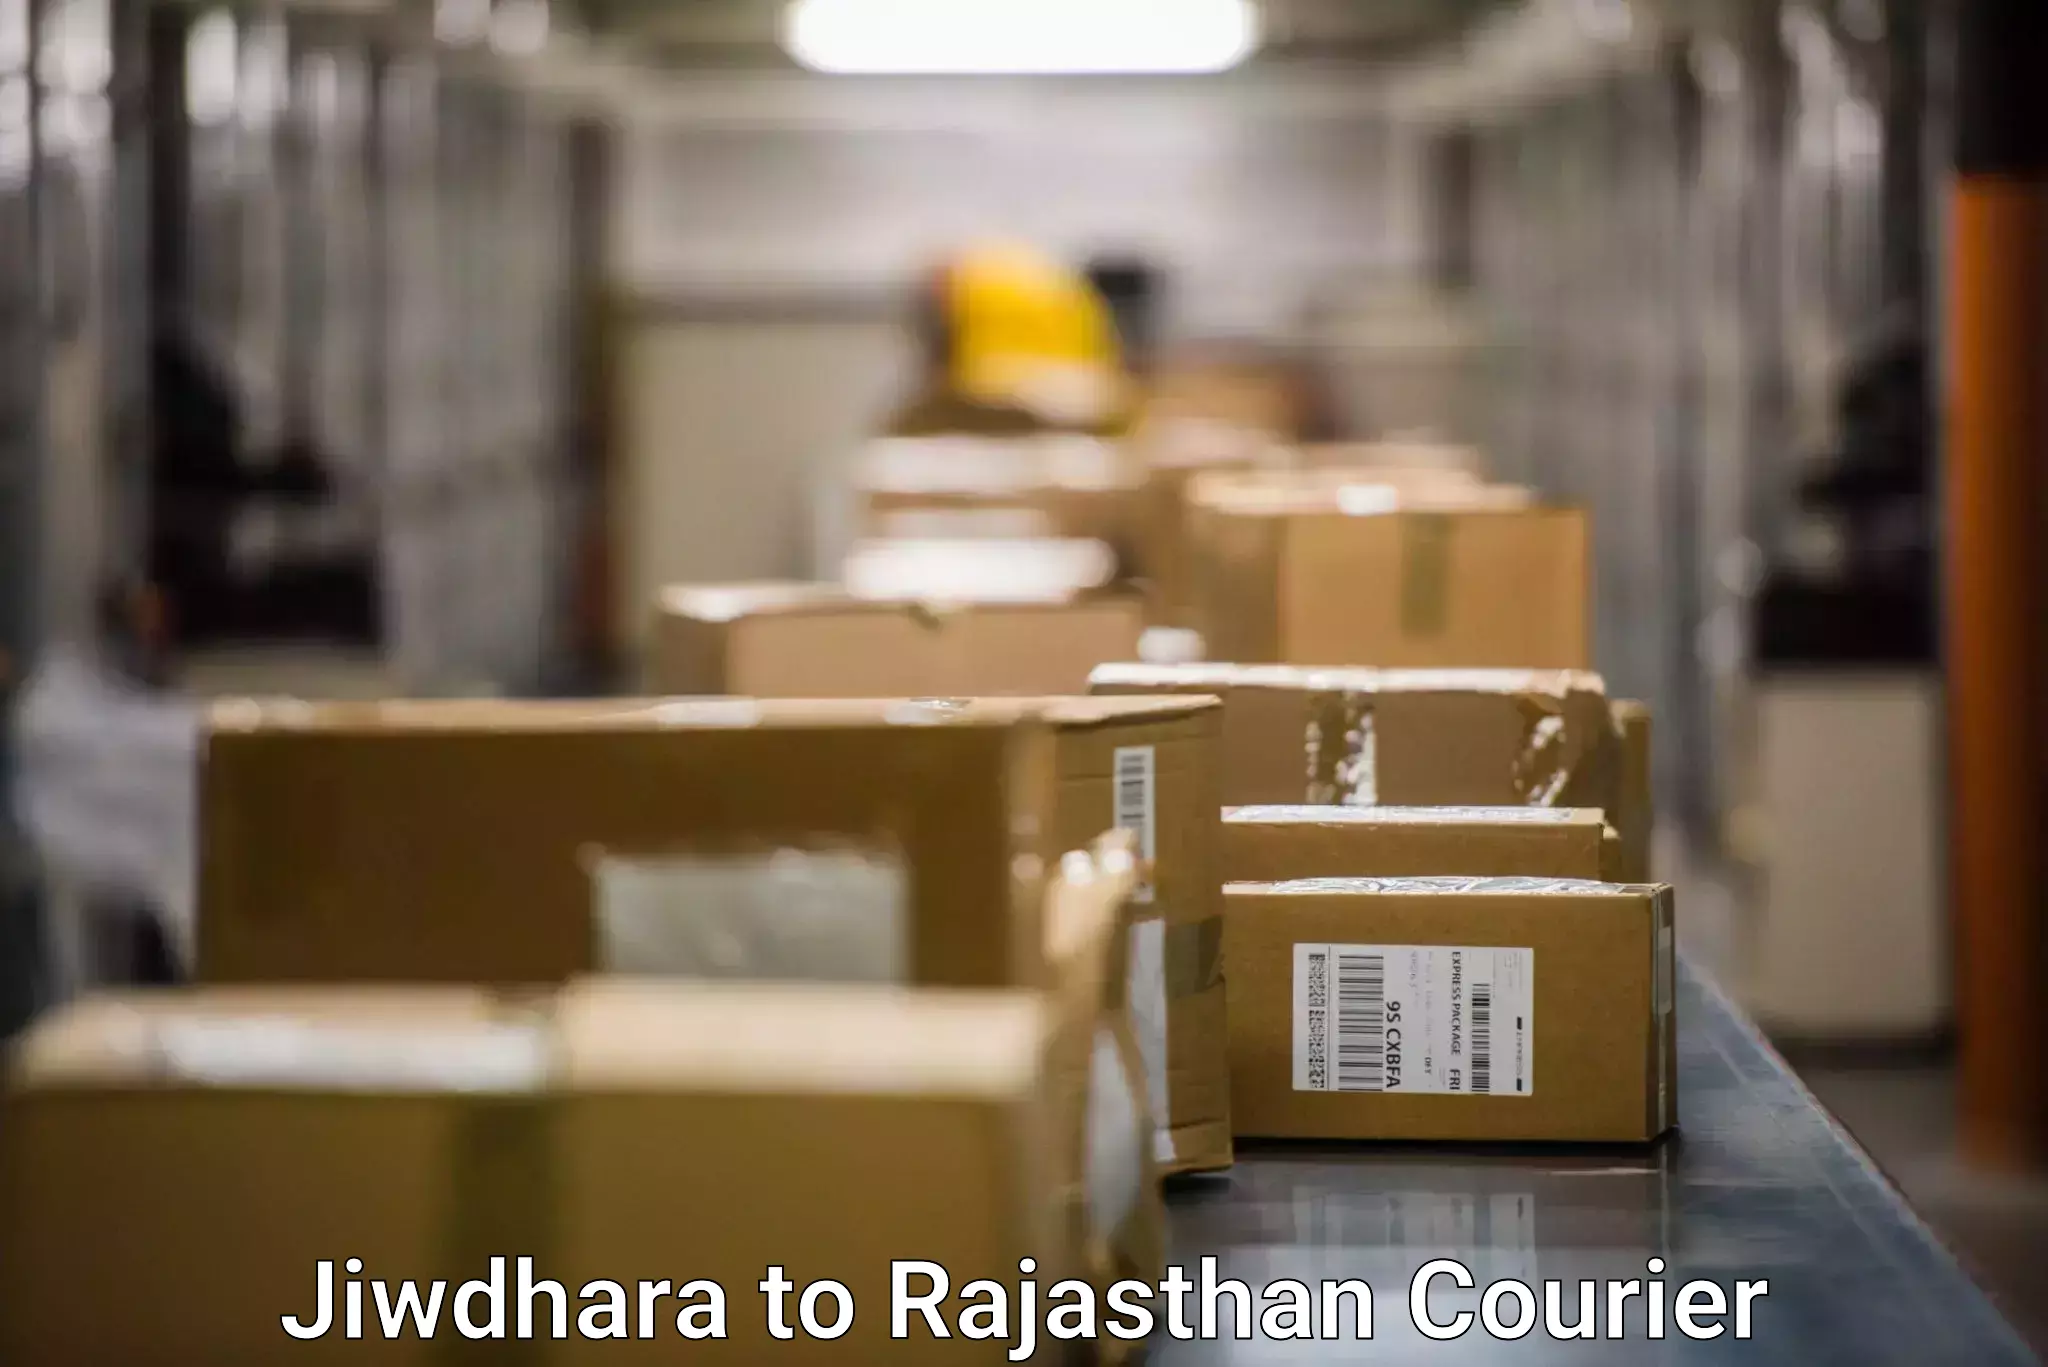 Professional courier handling Jiwdhara to Dholpur